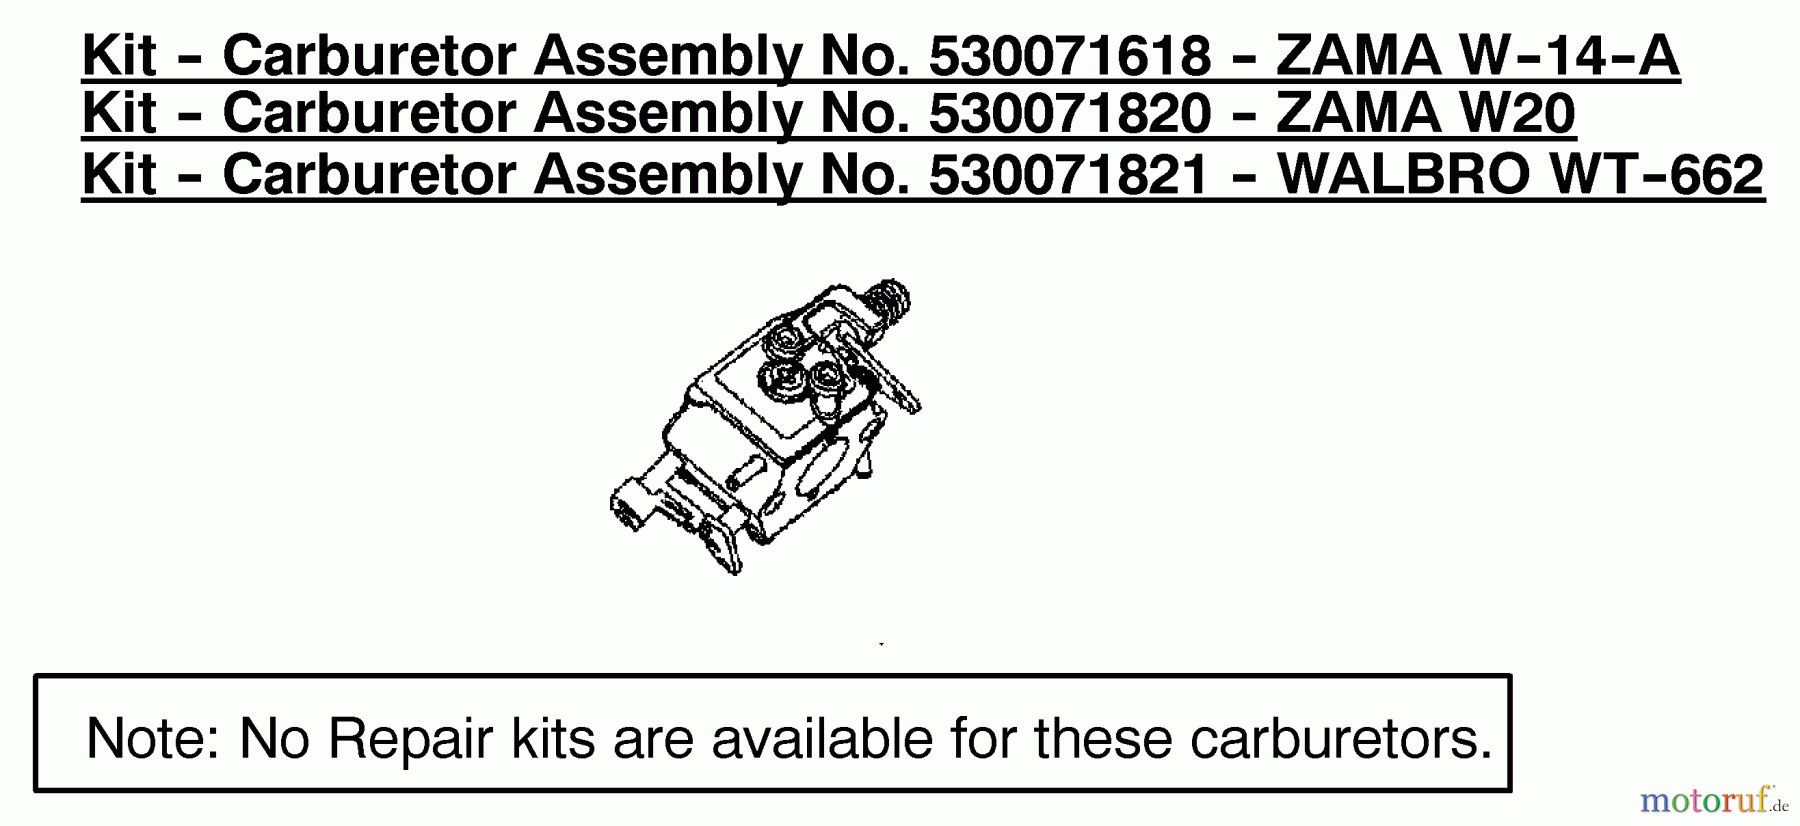  Poulan / Weed Eater Motorsägen 1975 (Type 6) - Poulan Woodshark Chainsaw Carburetor Assembly (Zama W20) P/N 530071820